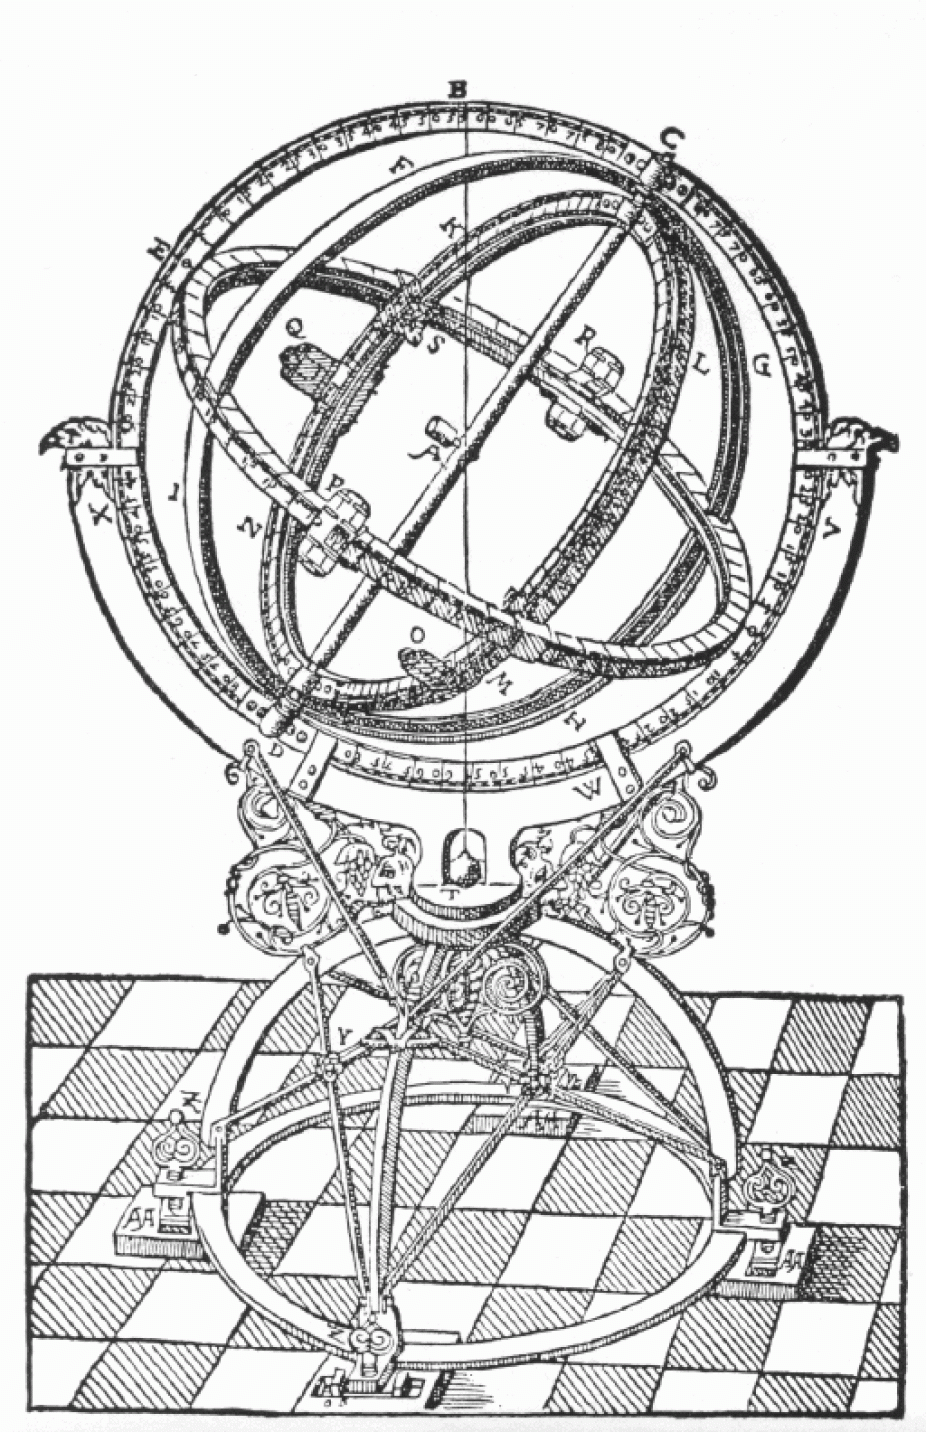 1581 armillary sphere